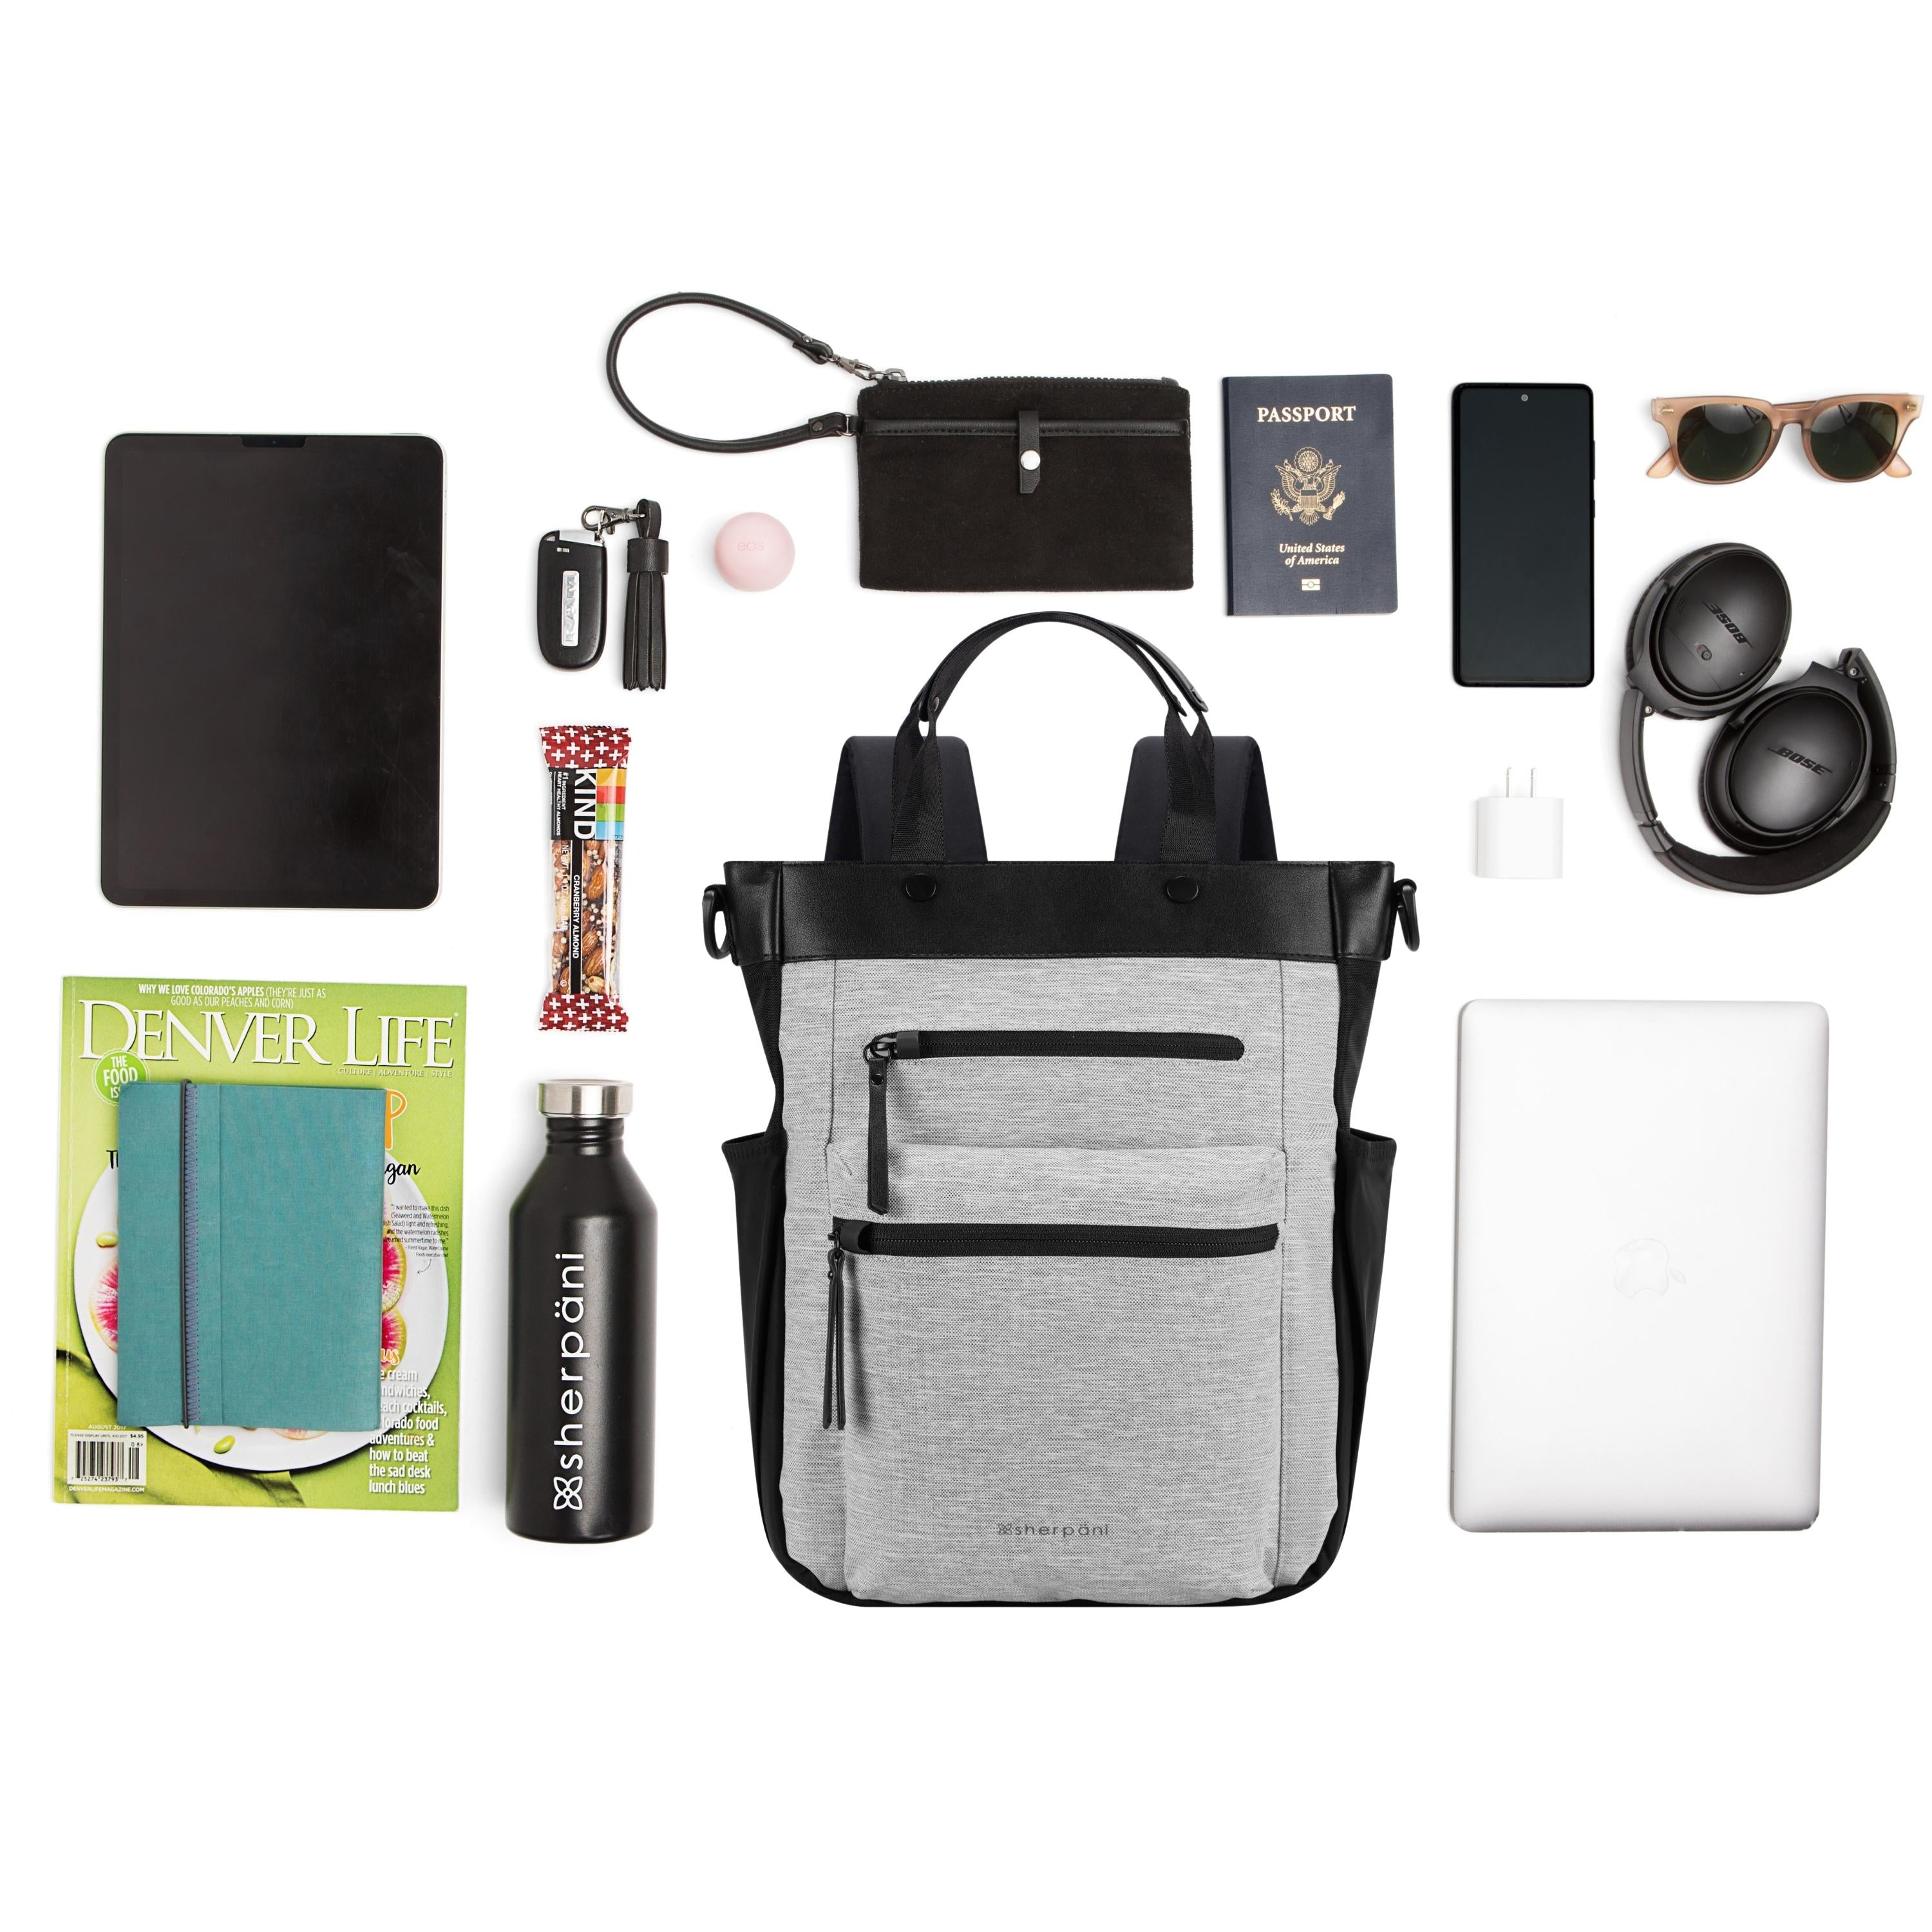 Sherpani Soleil AT Travel Backpack/Crossbody/Tote Bag sterling